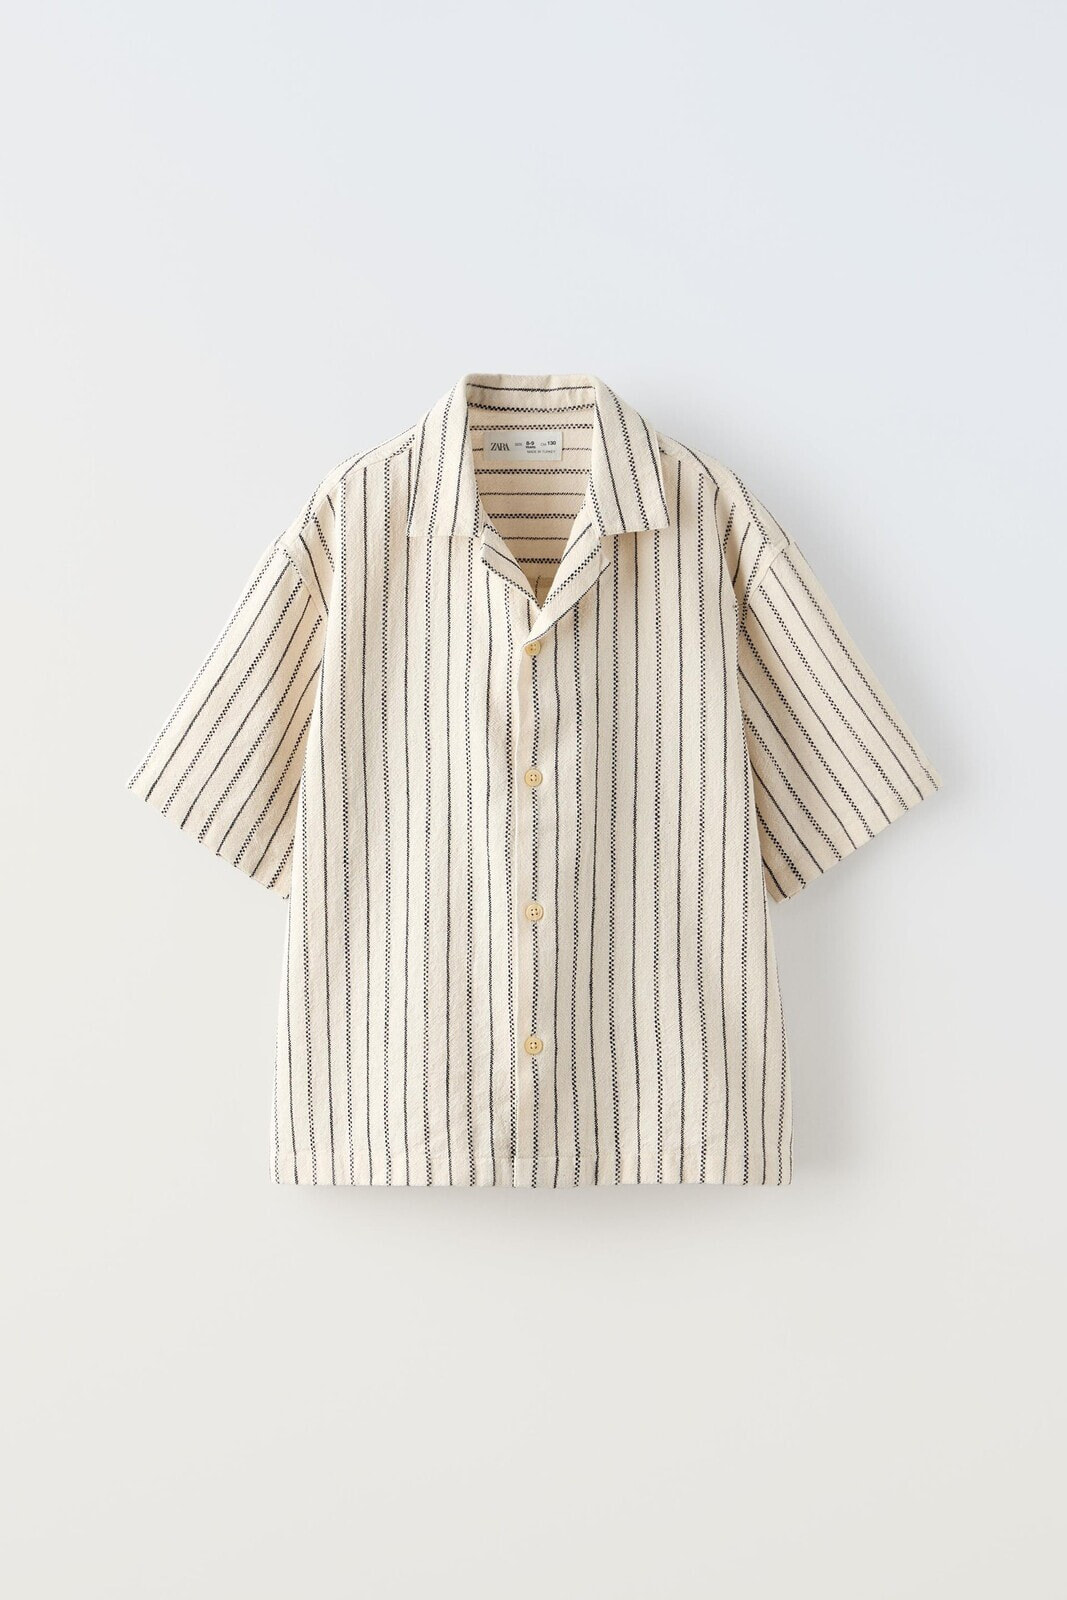 Fabric stripe shirt